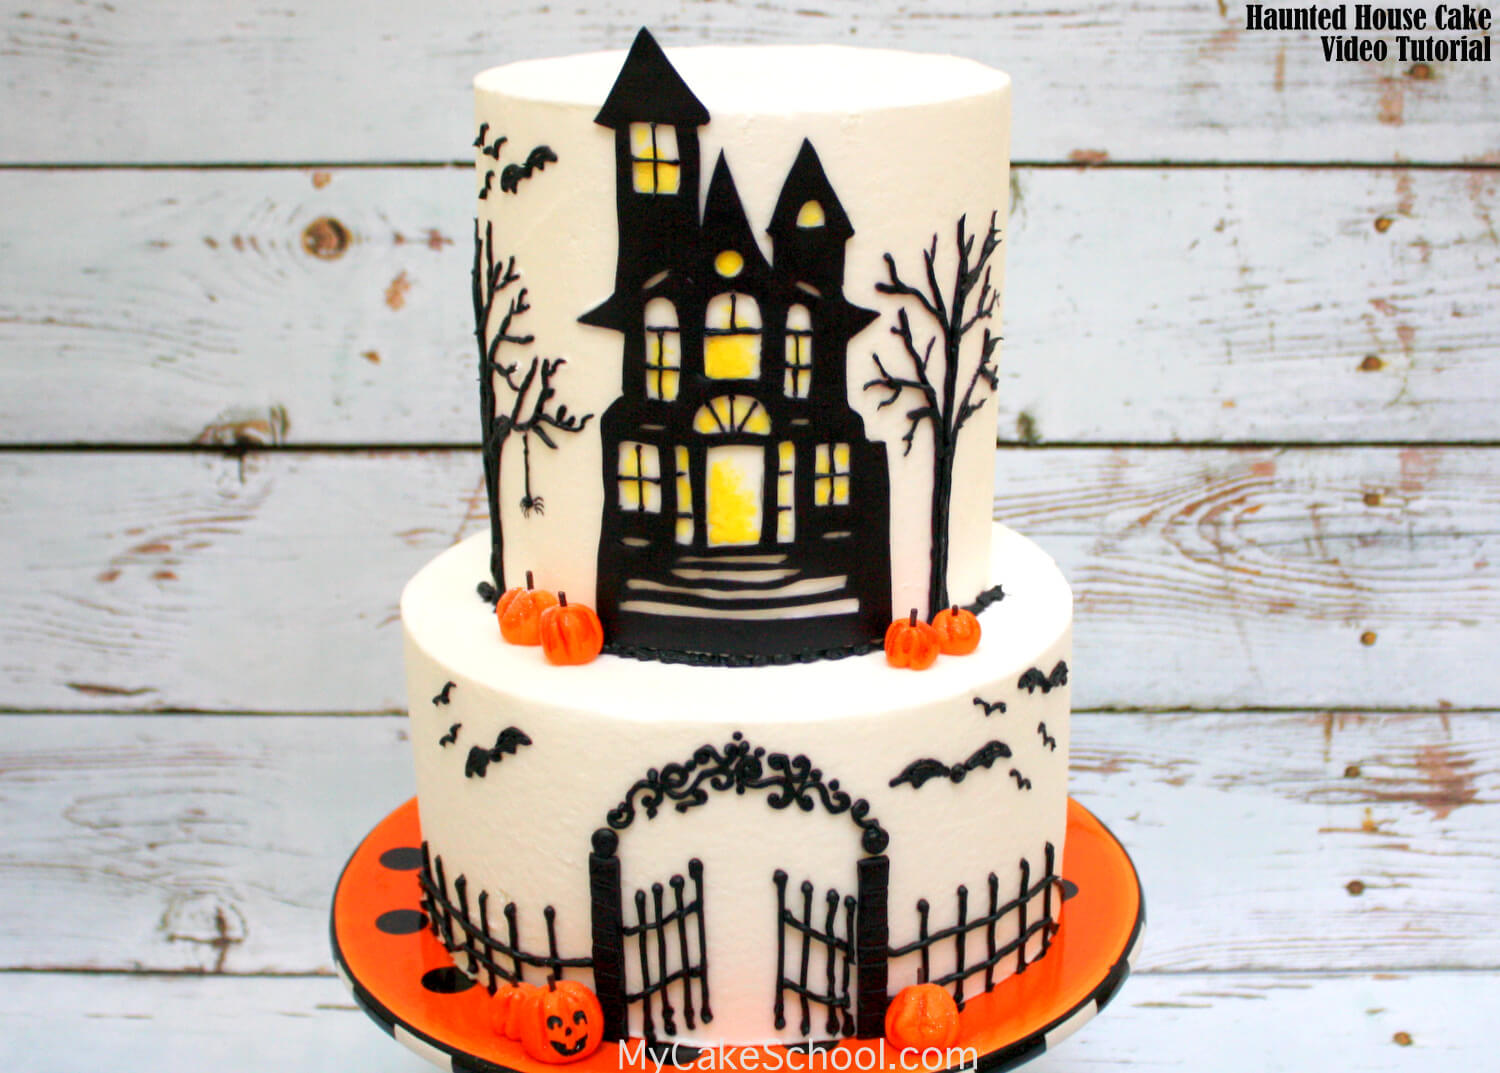 7 halloween cake decorating ideas farmfoodfamily